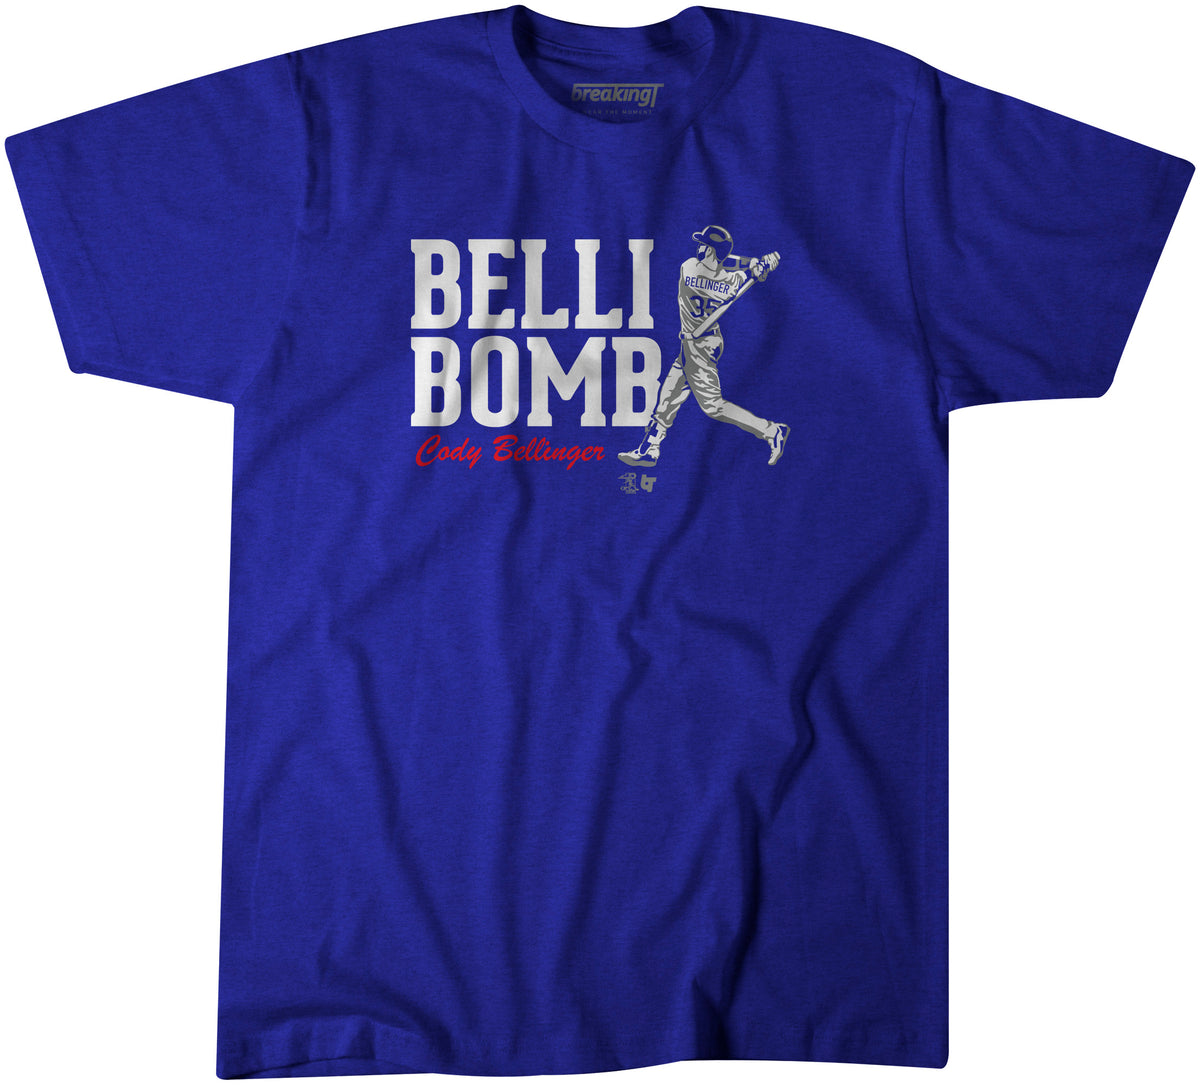 Belli Bat Flip Cody Bellinger shirt - Kingteeshop